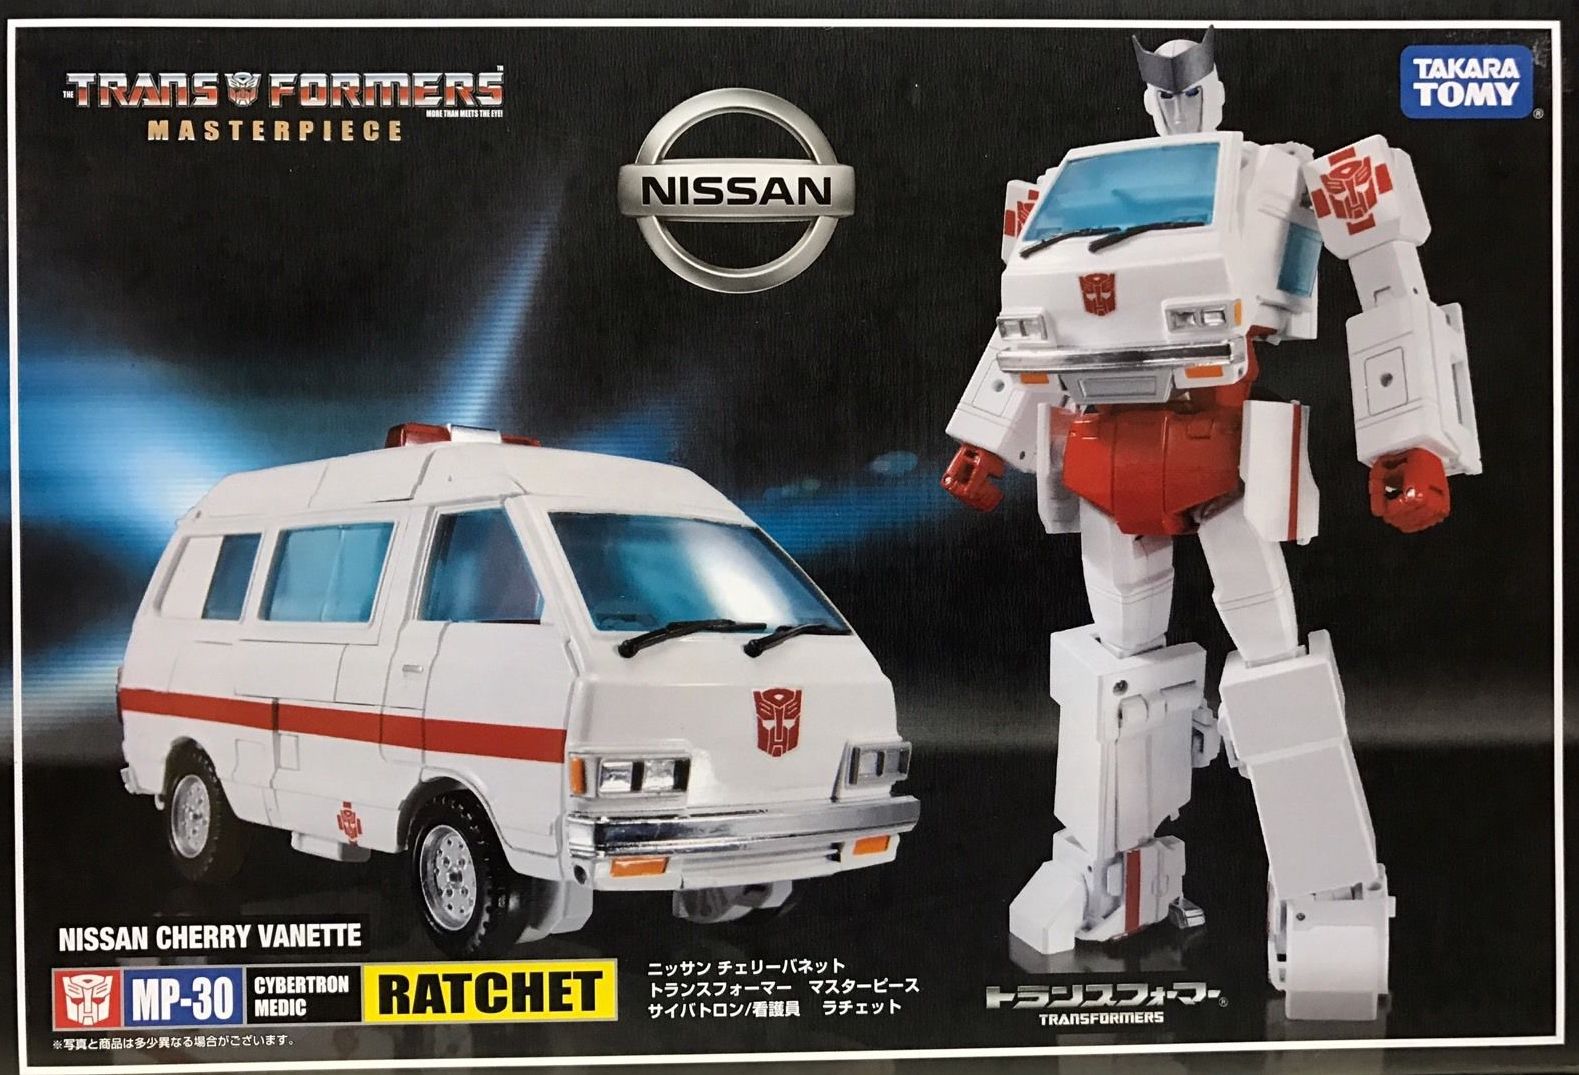 Transformers Takara Tomy Masterpiece MP-30 Ratchet Nissan Cherry Vanette Toy New